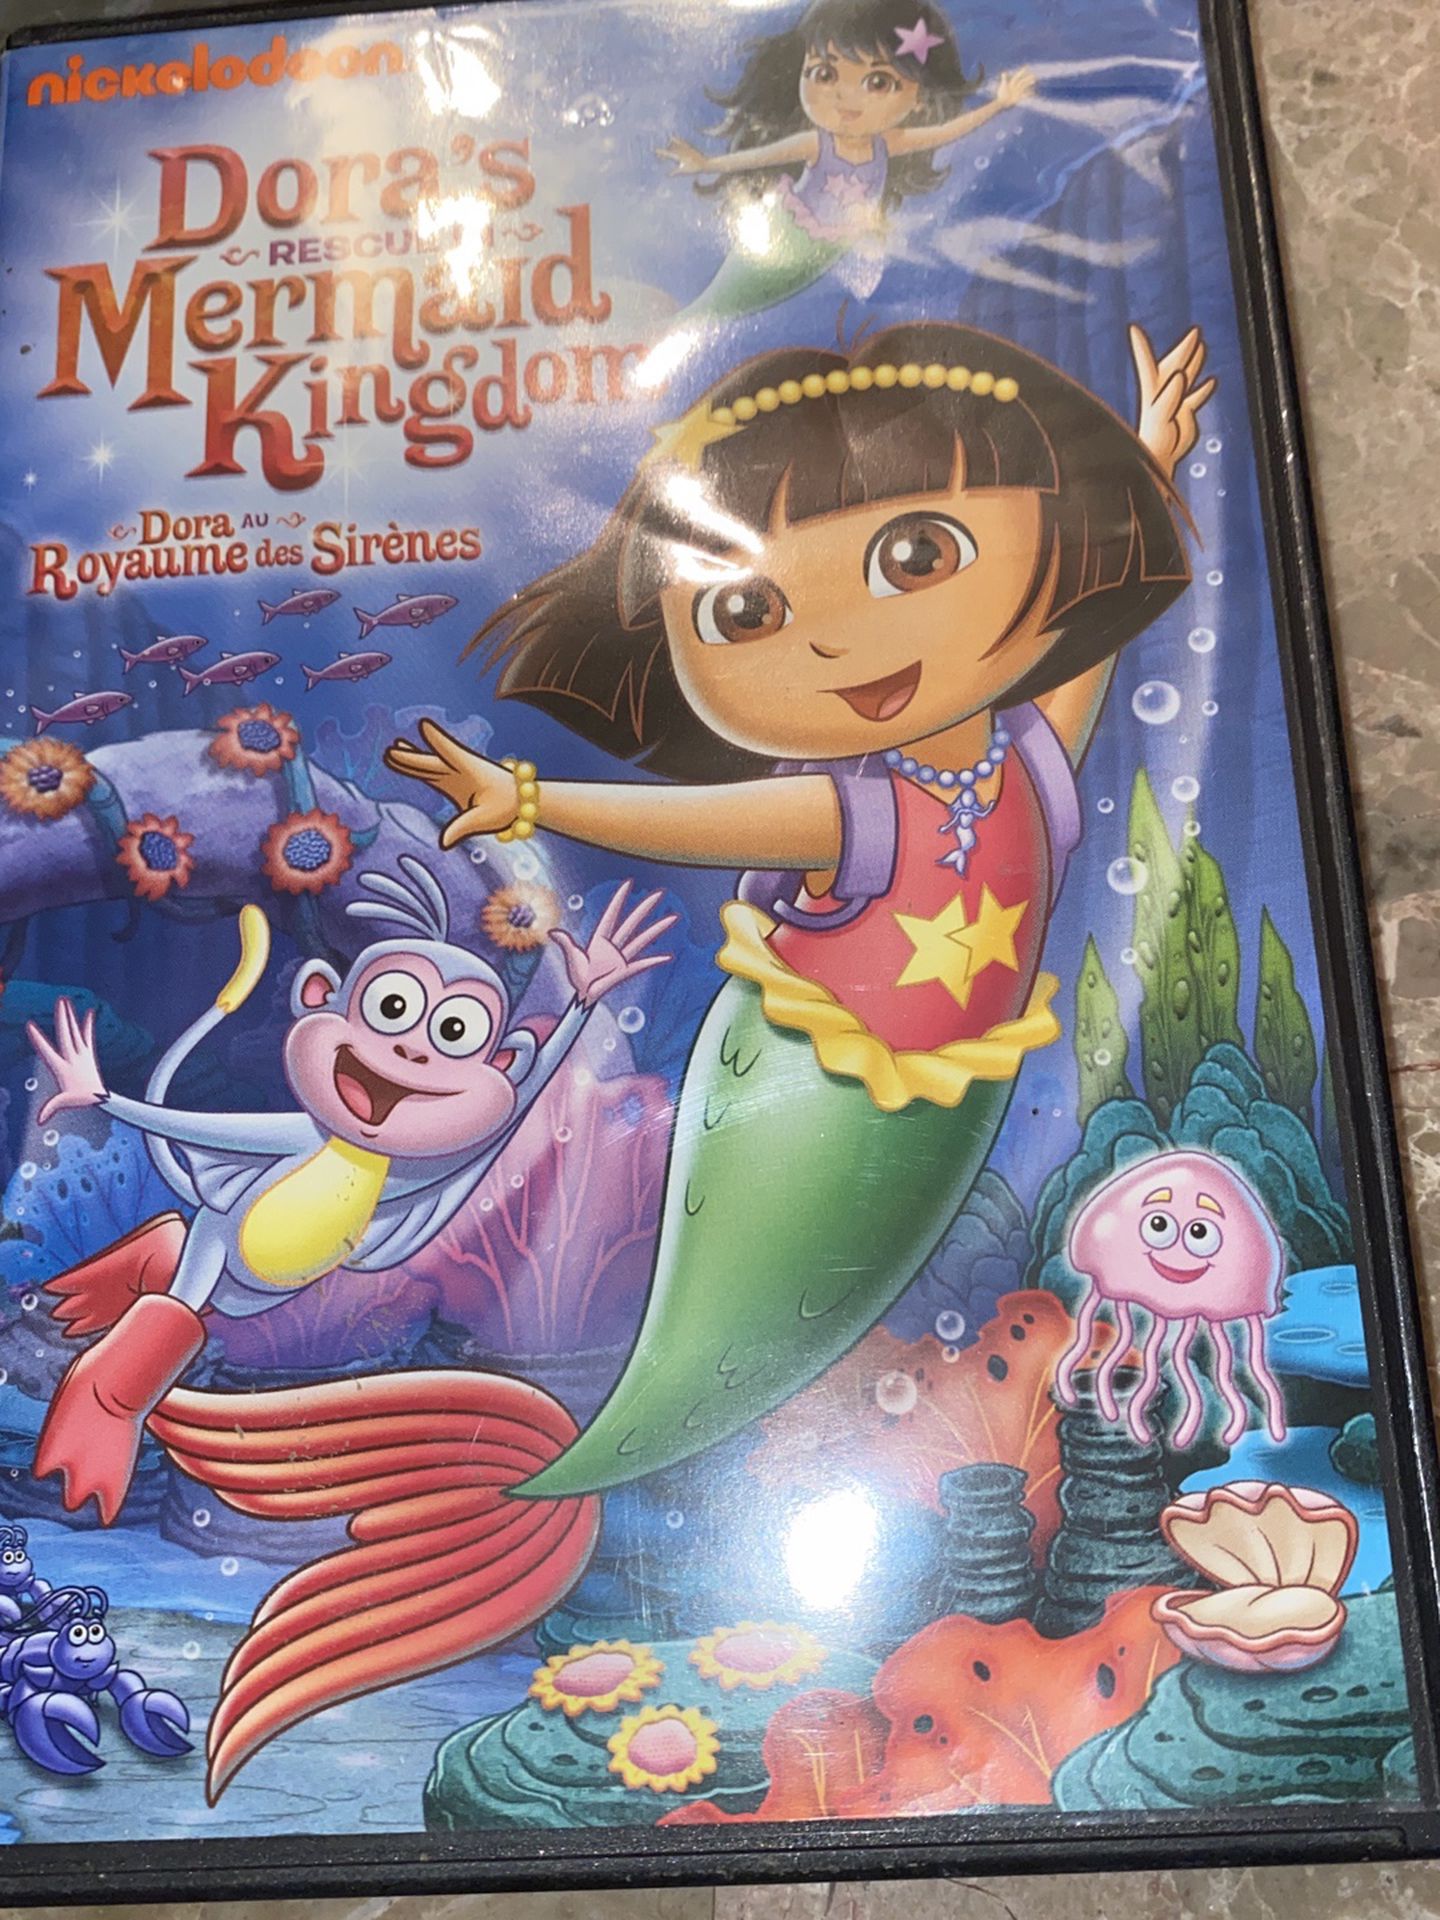 Dora the Explorer: Doras Rescue in the Mermaid Kingdom DVD